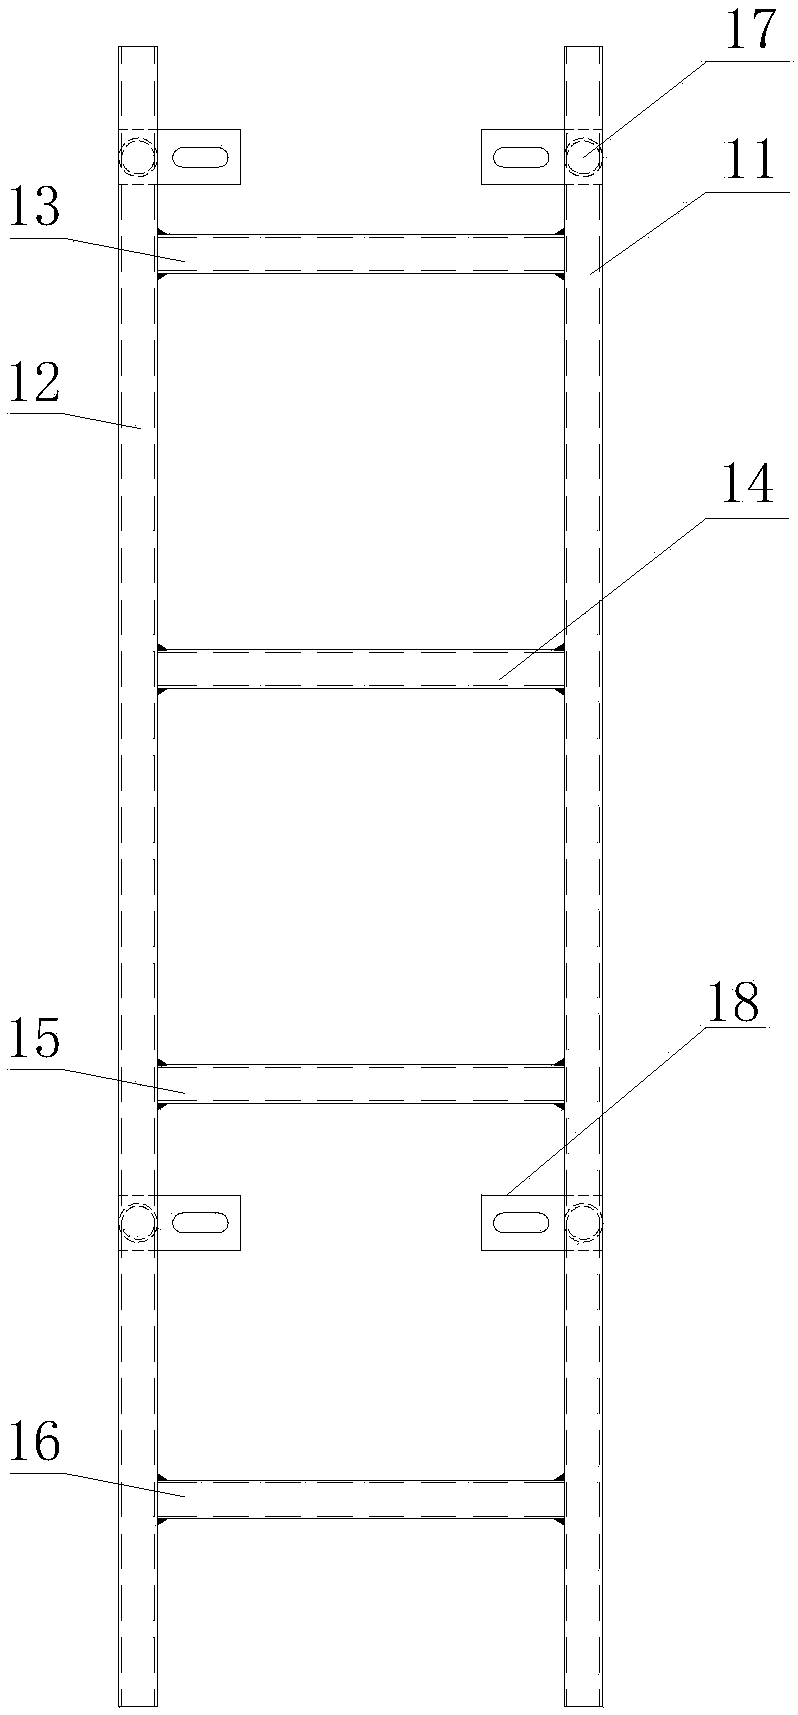 Modular elevator shaft ladder stand